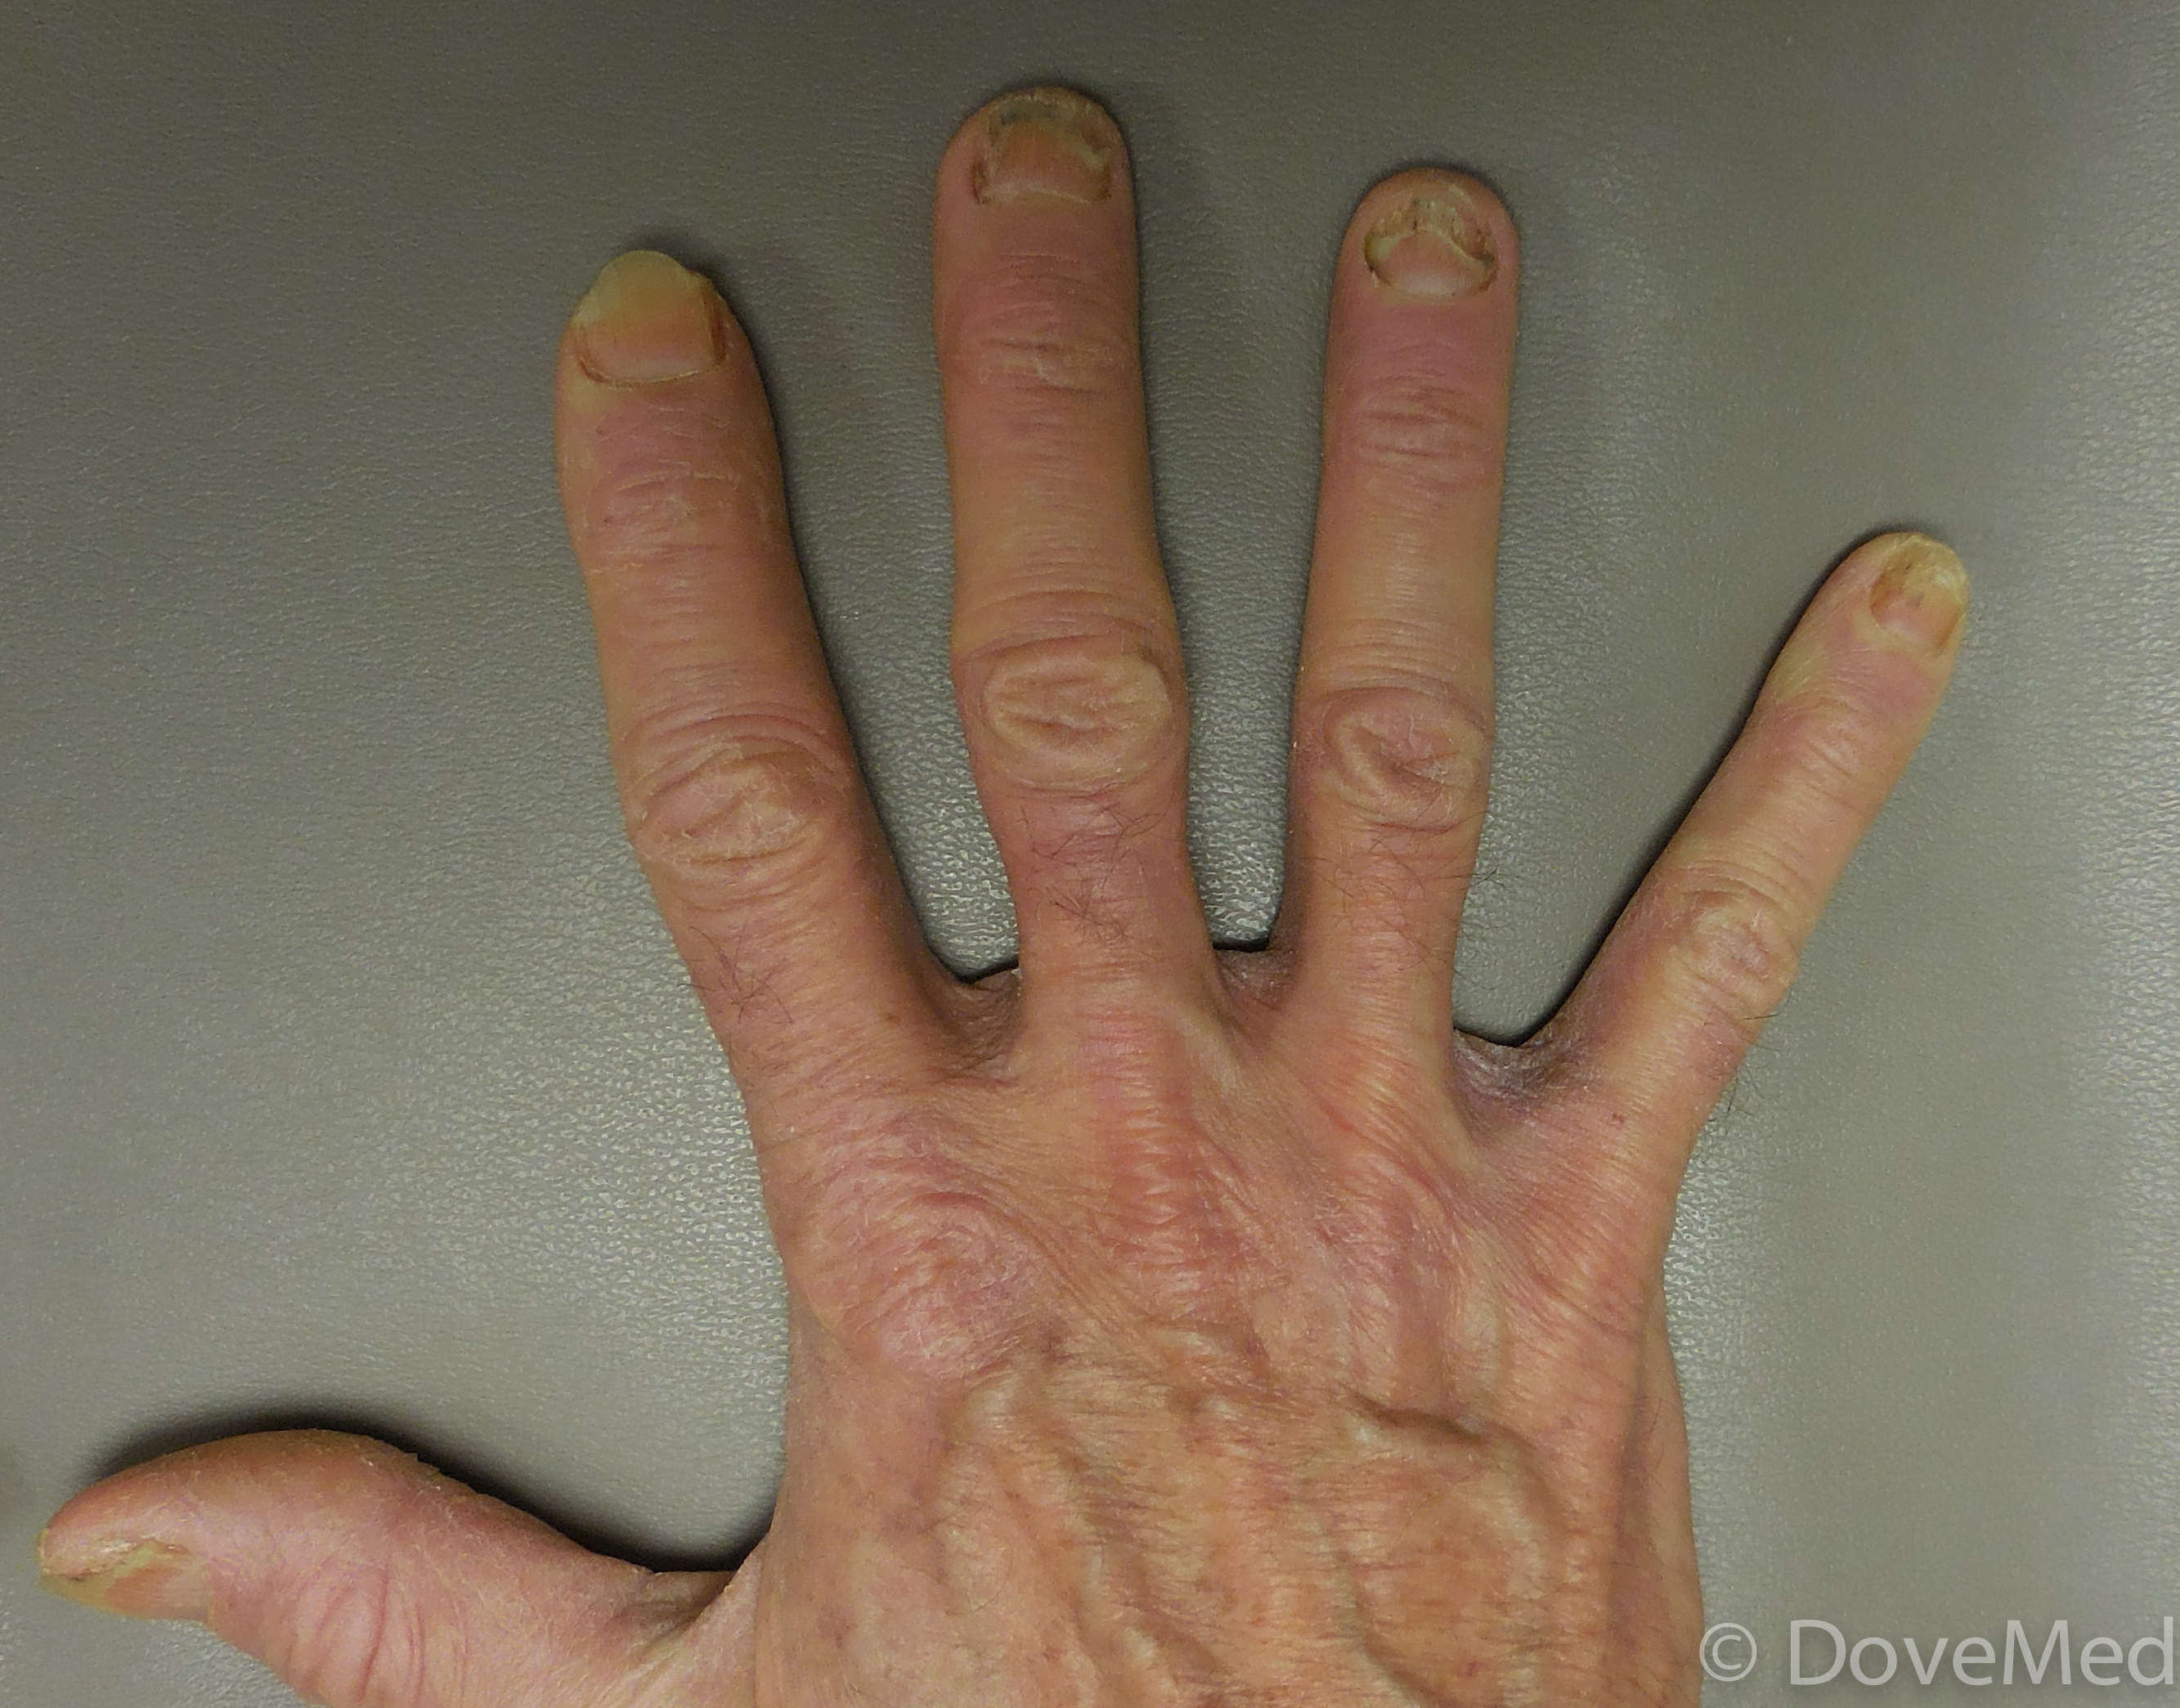 Ringworm - tinea manuum on the finger: MedlinePlus Medical Encyclopedia  Image